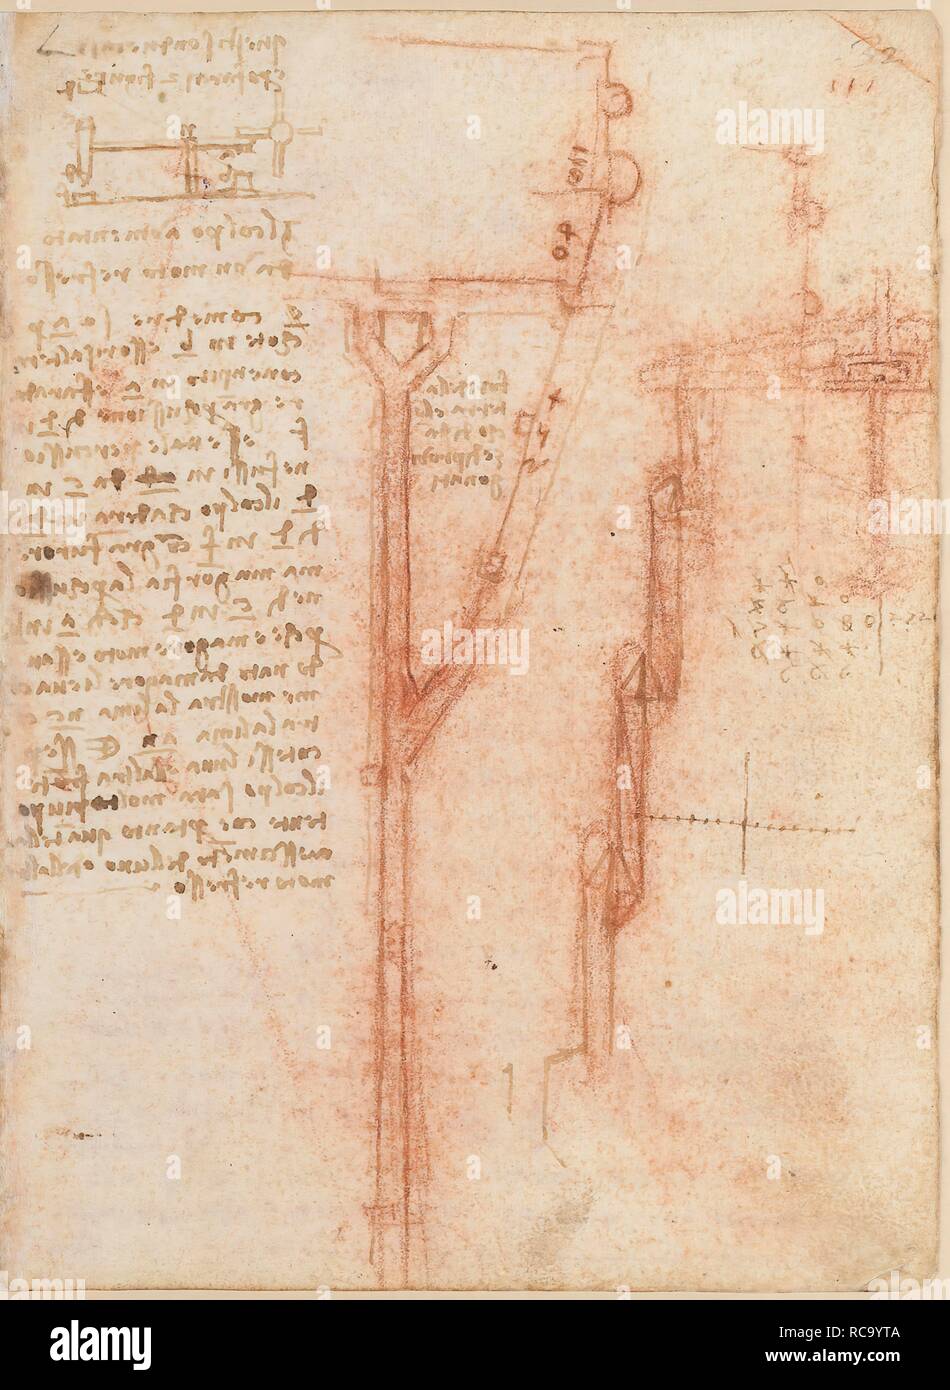 Folio f 32r. Codex Madrid II (Ms. 8936) 'Treaty of fortification, statics and geometry'. 158 folios with 316 pages. Internal format: 210 x 145 mm. CIVIL ENGINEERING, CONSTRUCTION. PRINCIPLES OF MECHANICS, CINEMATICS, DYNAMICS. Museum: BIBLIOTECA NACIONAL DE ESPAÑA, MADRID. Author: LEONARDO DA VINCI. Stock Photo